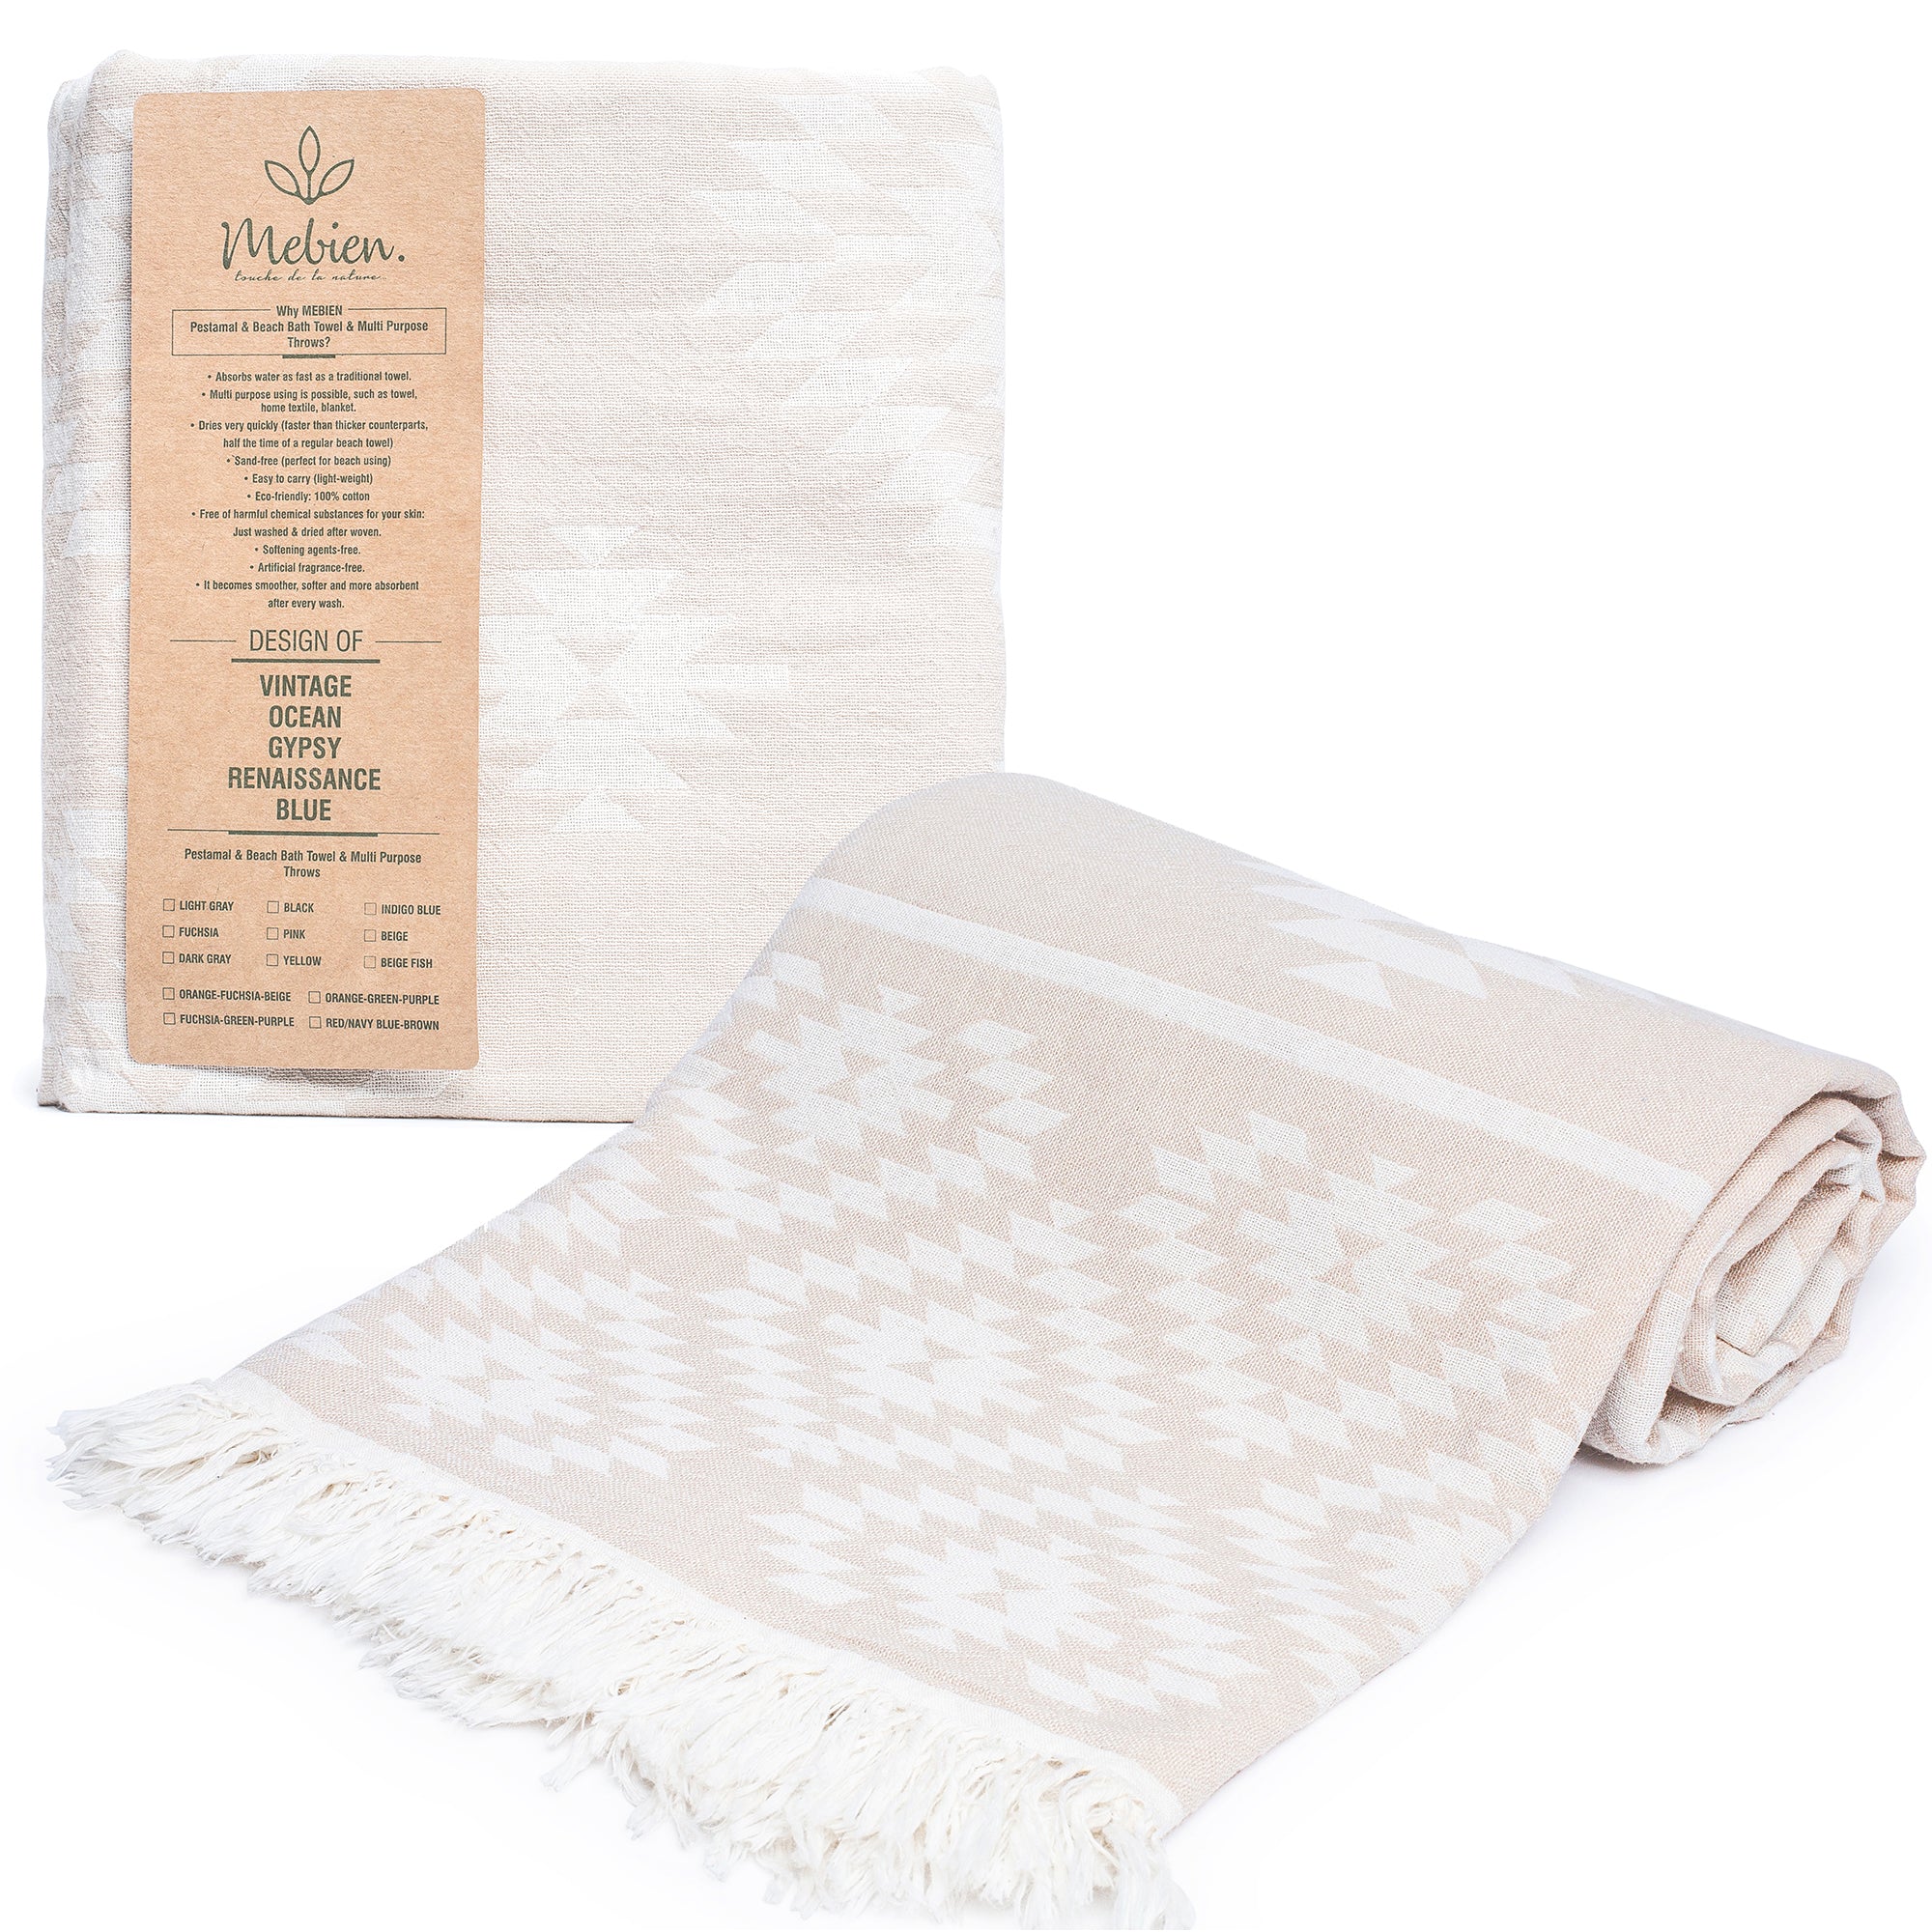 Elbourn Microfibre Beach Towel, 150 x 75cm Quick Drying, Sand Free